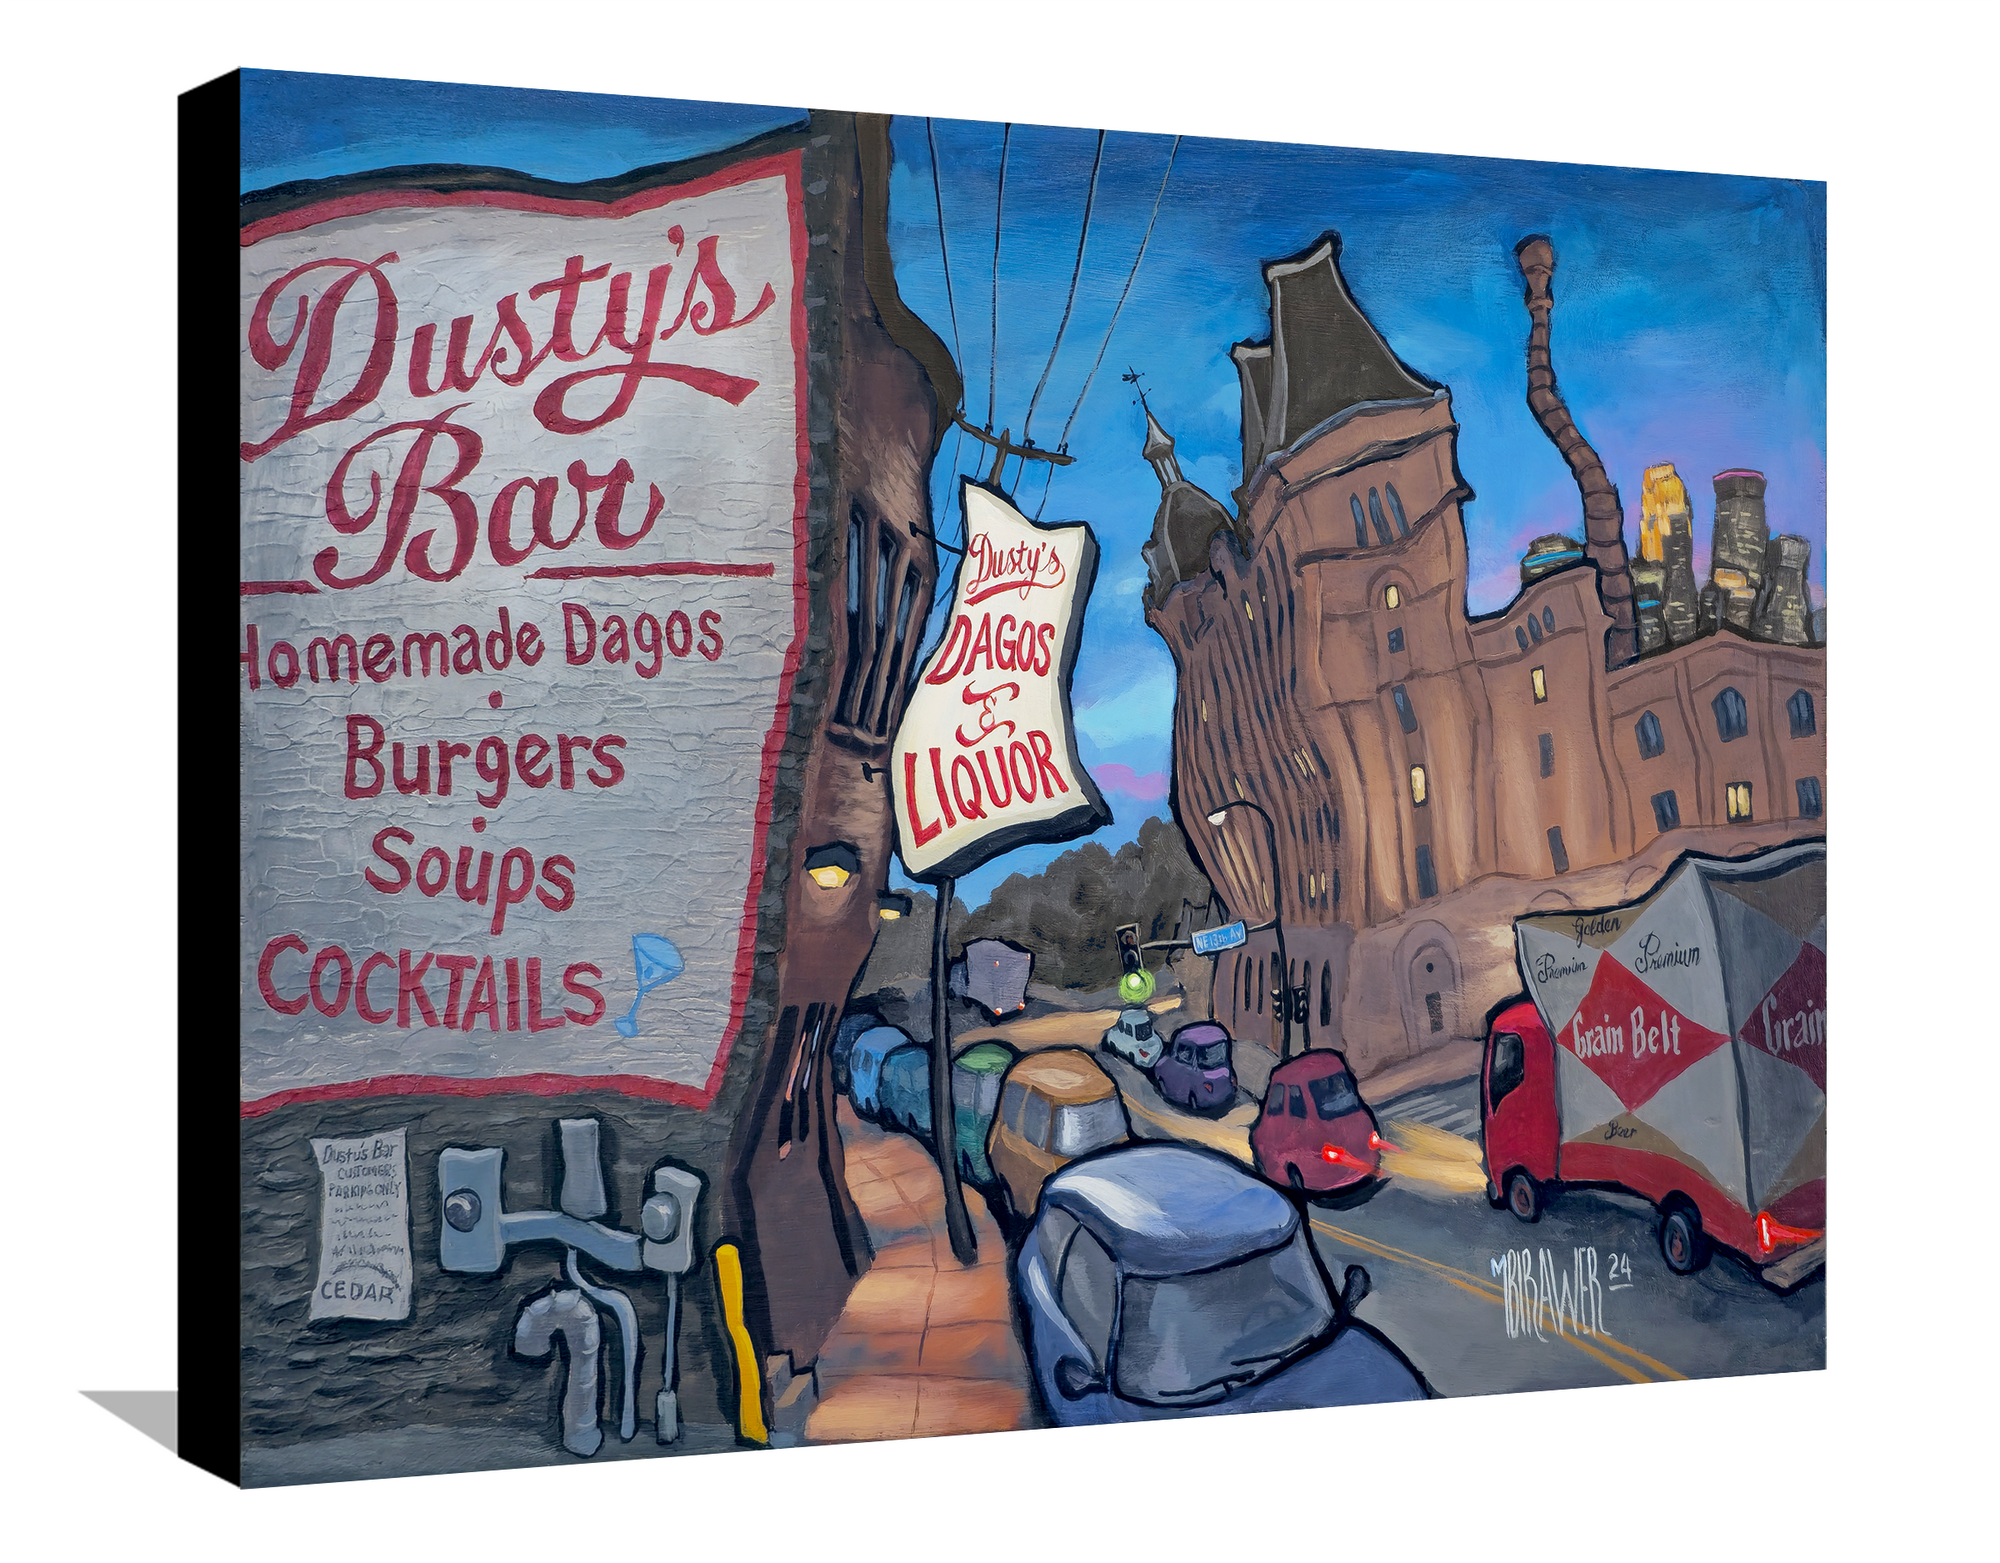 Dusty's Bar - Minneapolis